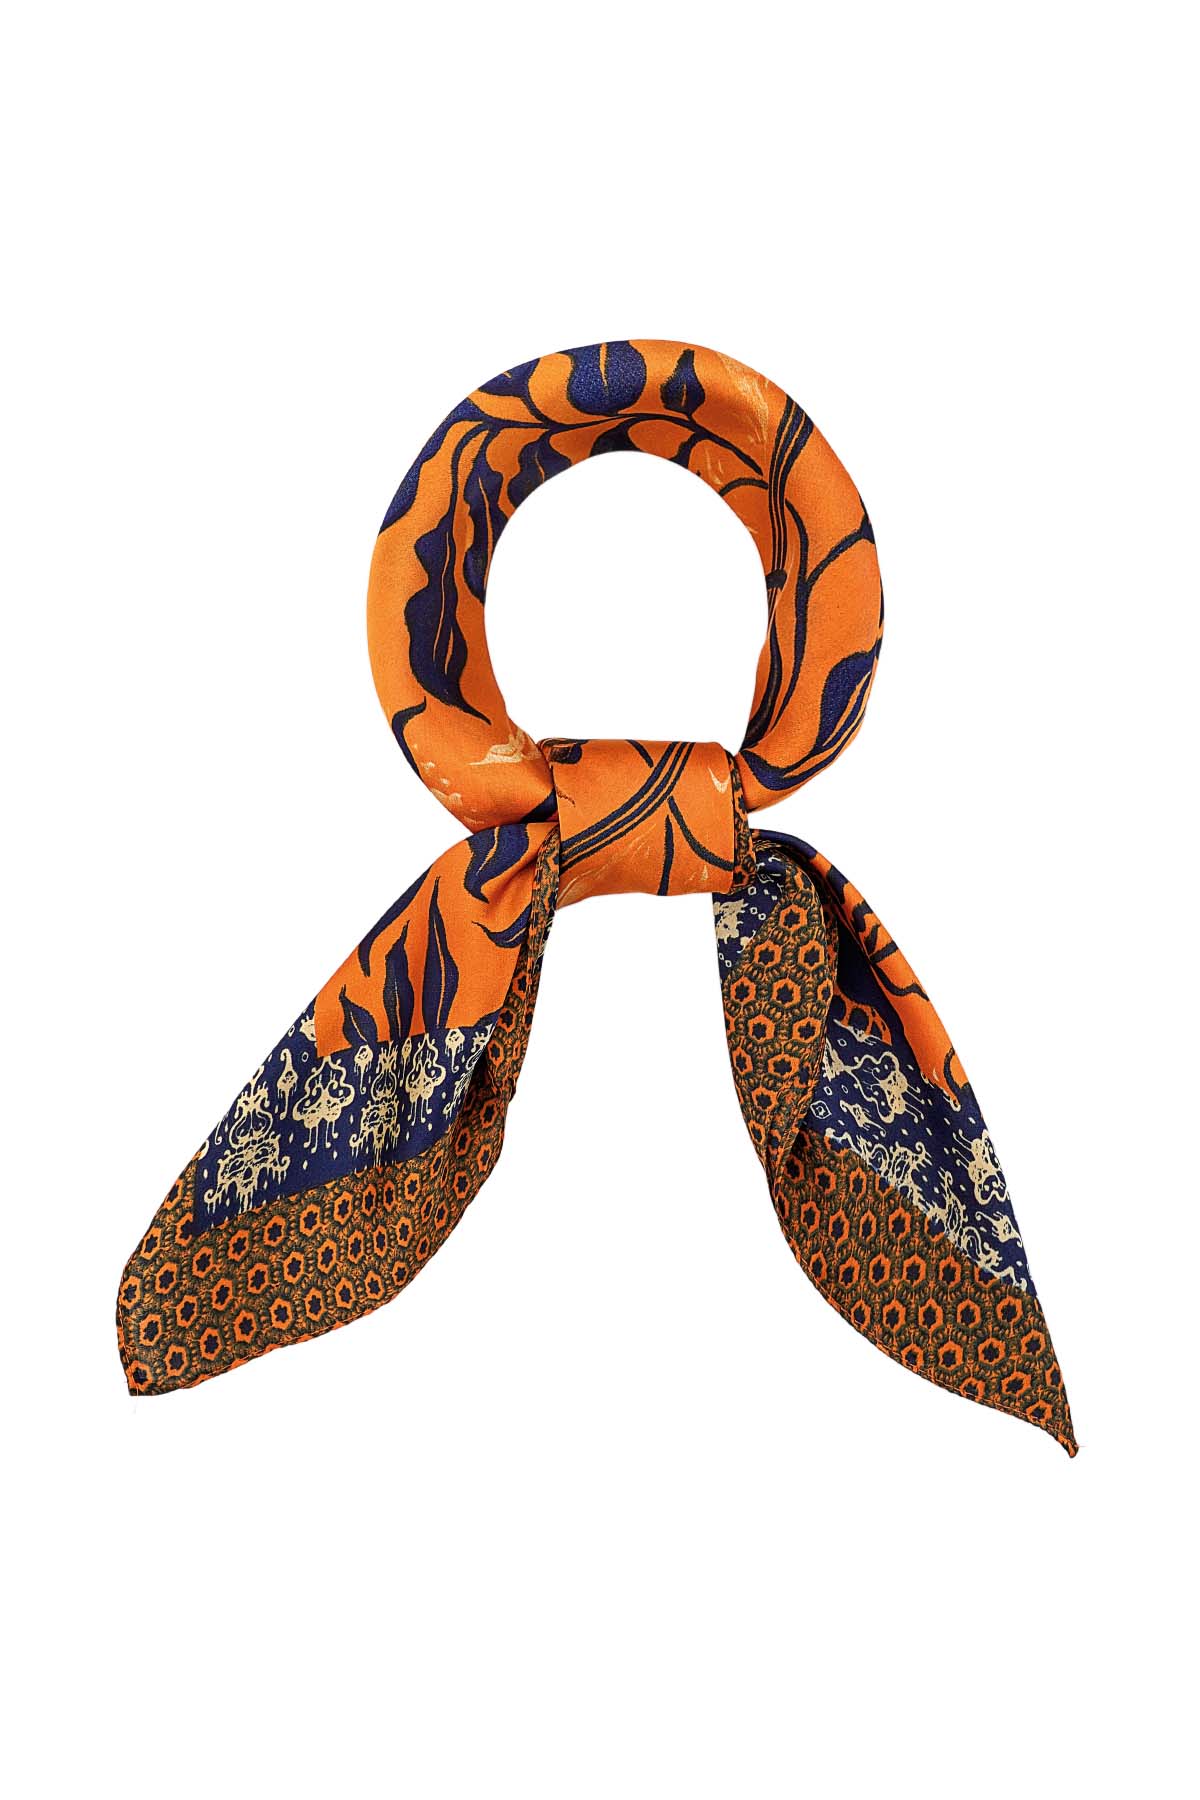 Sjaal stoere herfstprint - oranje h5 